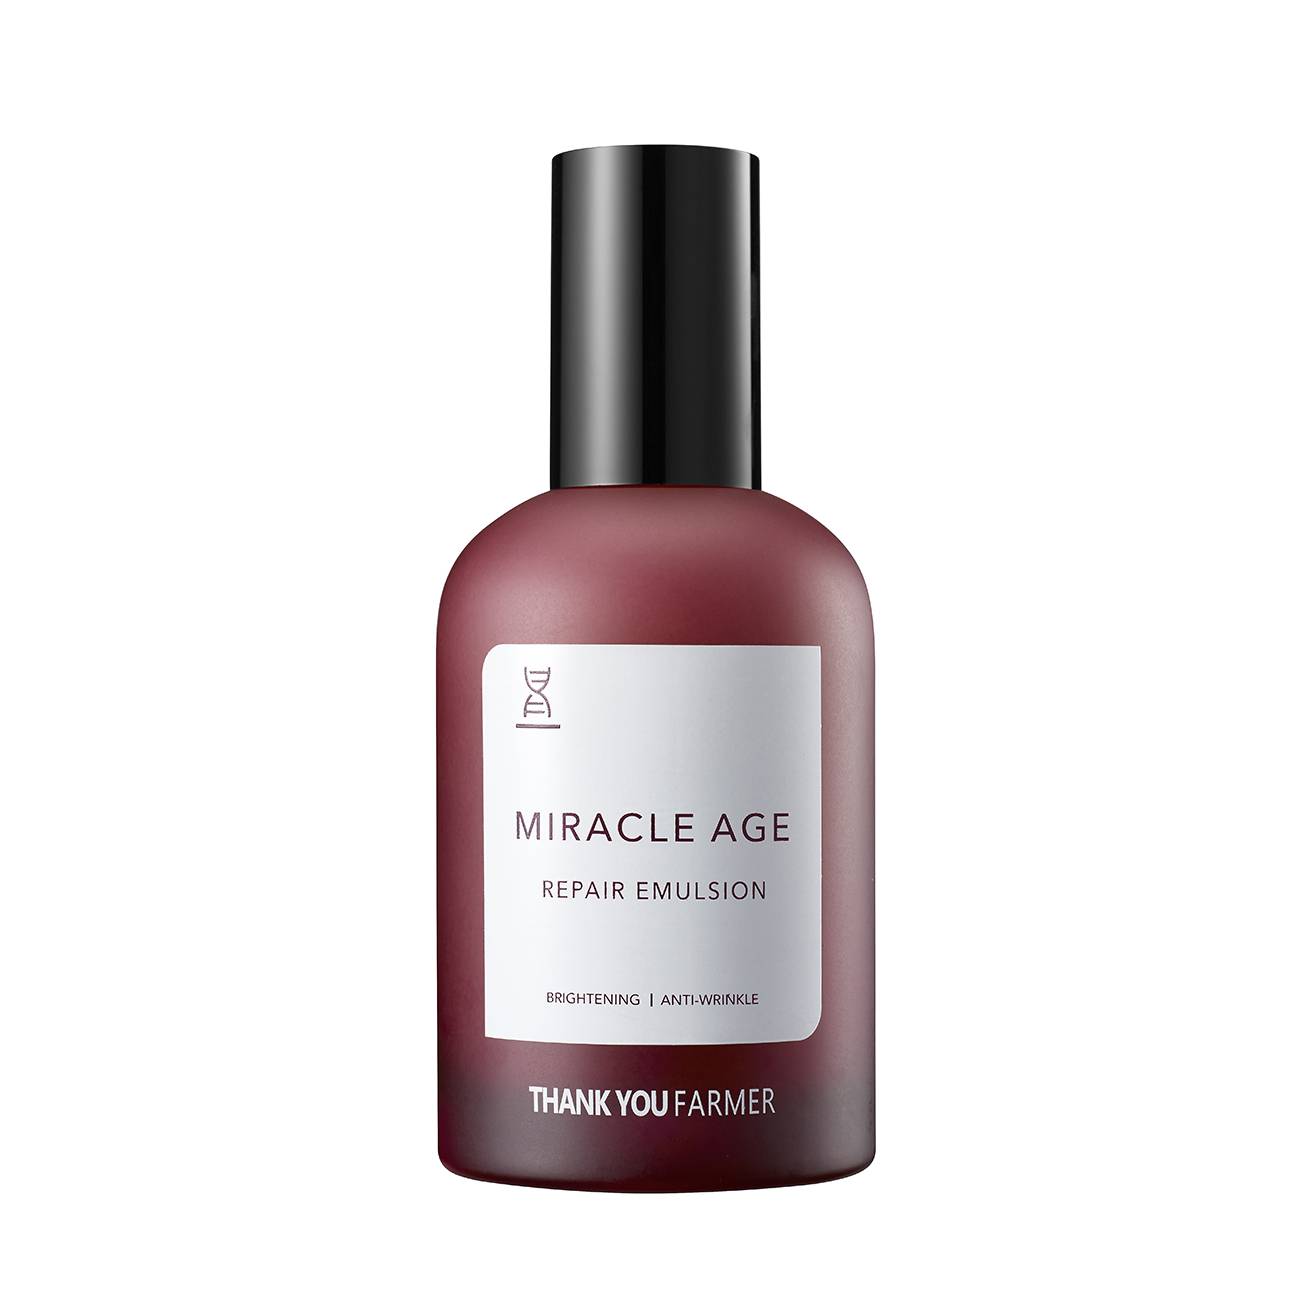 Miracle Age Repair Emulsion 130 ml Thank You Farmer bestvalue.eu imagine noua